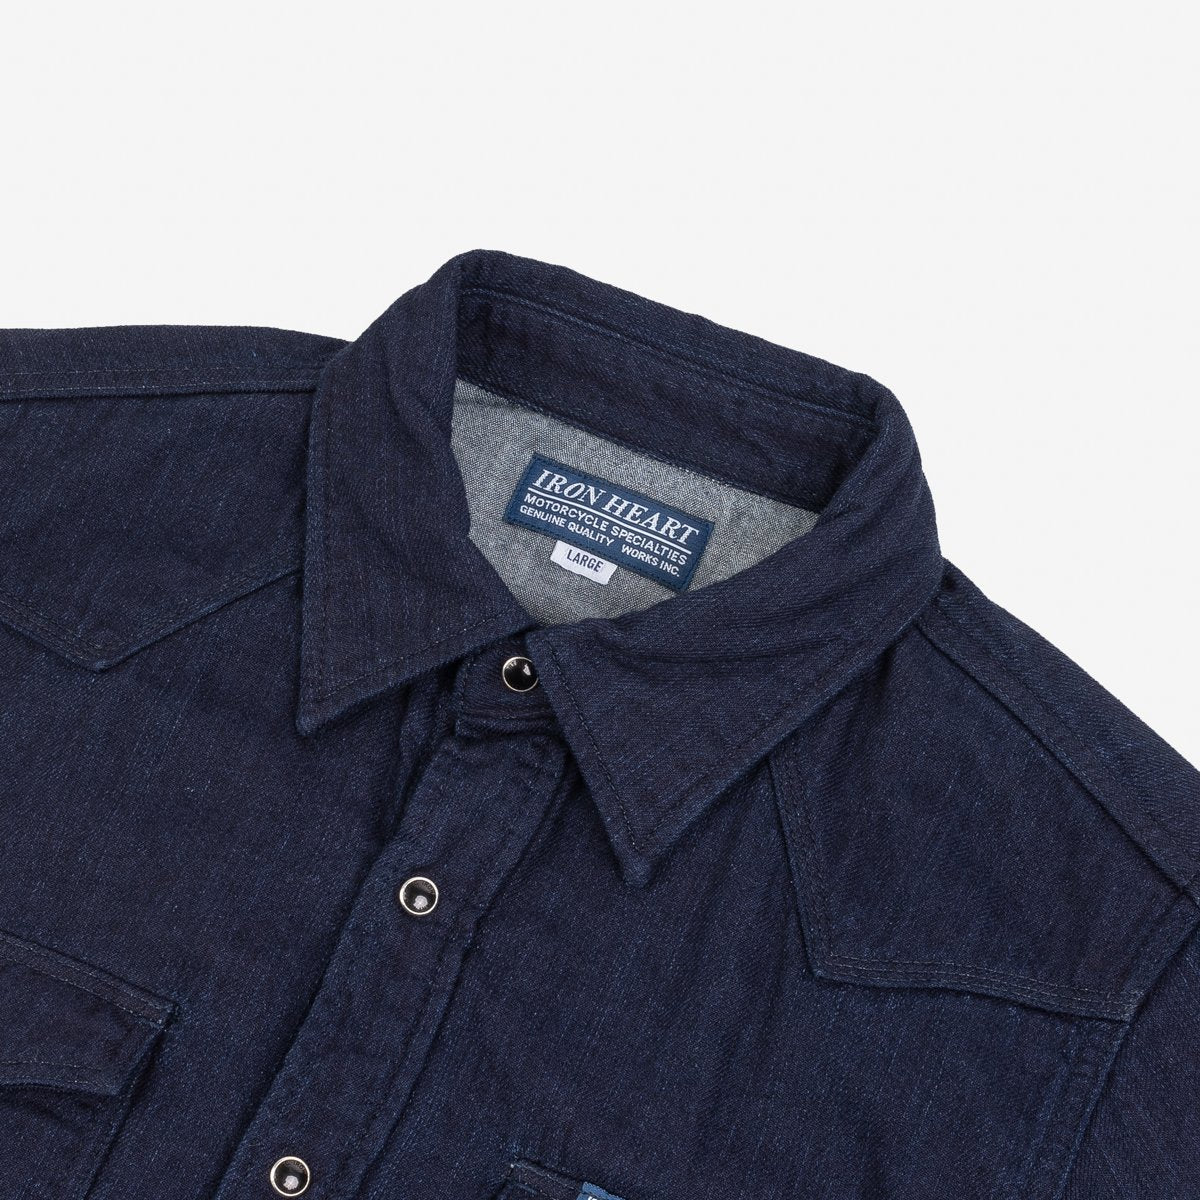 10oz Double Cloth Denim CPO Shirt - Indigo – Iron Shop Provisions